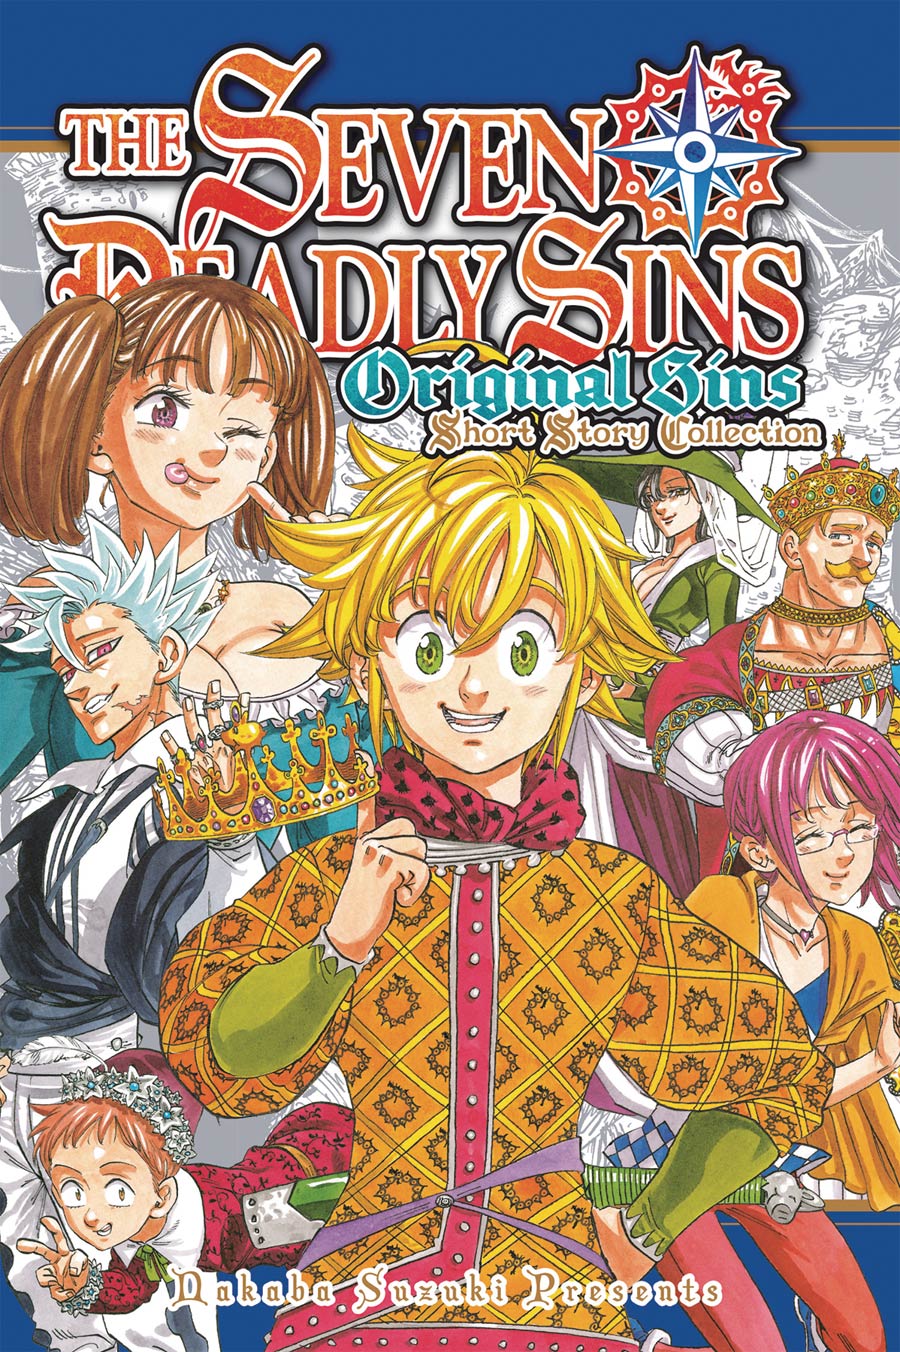 Seven Deadly Sins Original Sins Short Story Collection GN